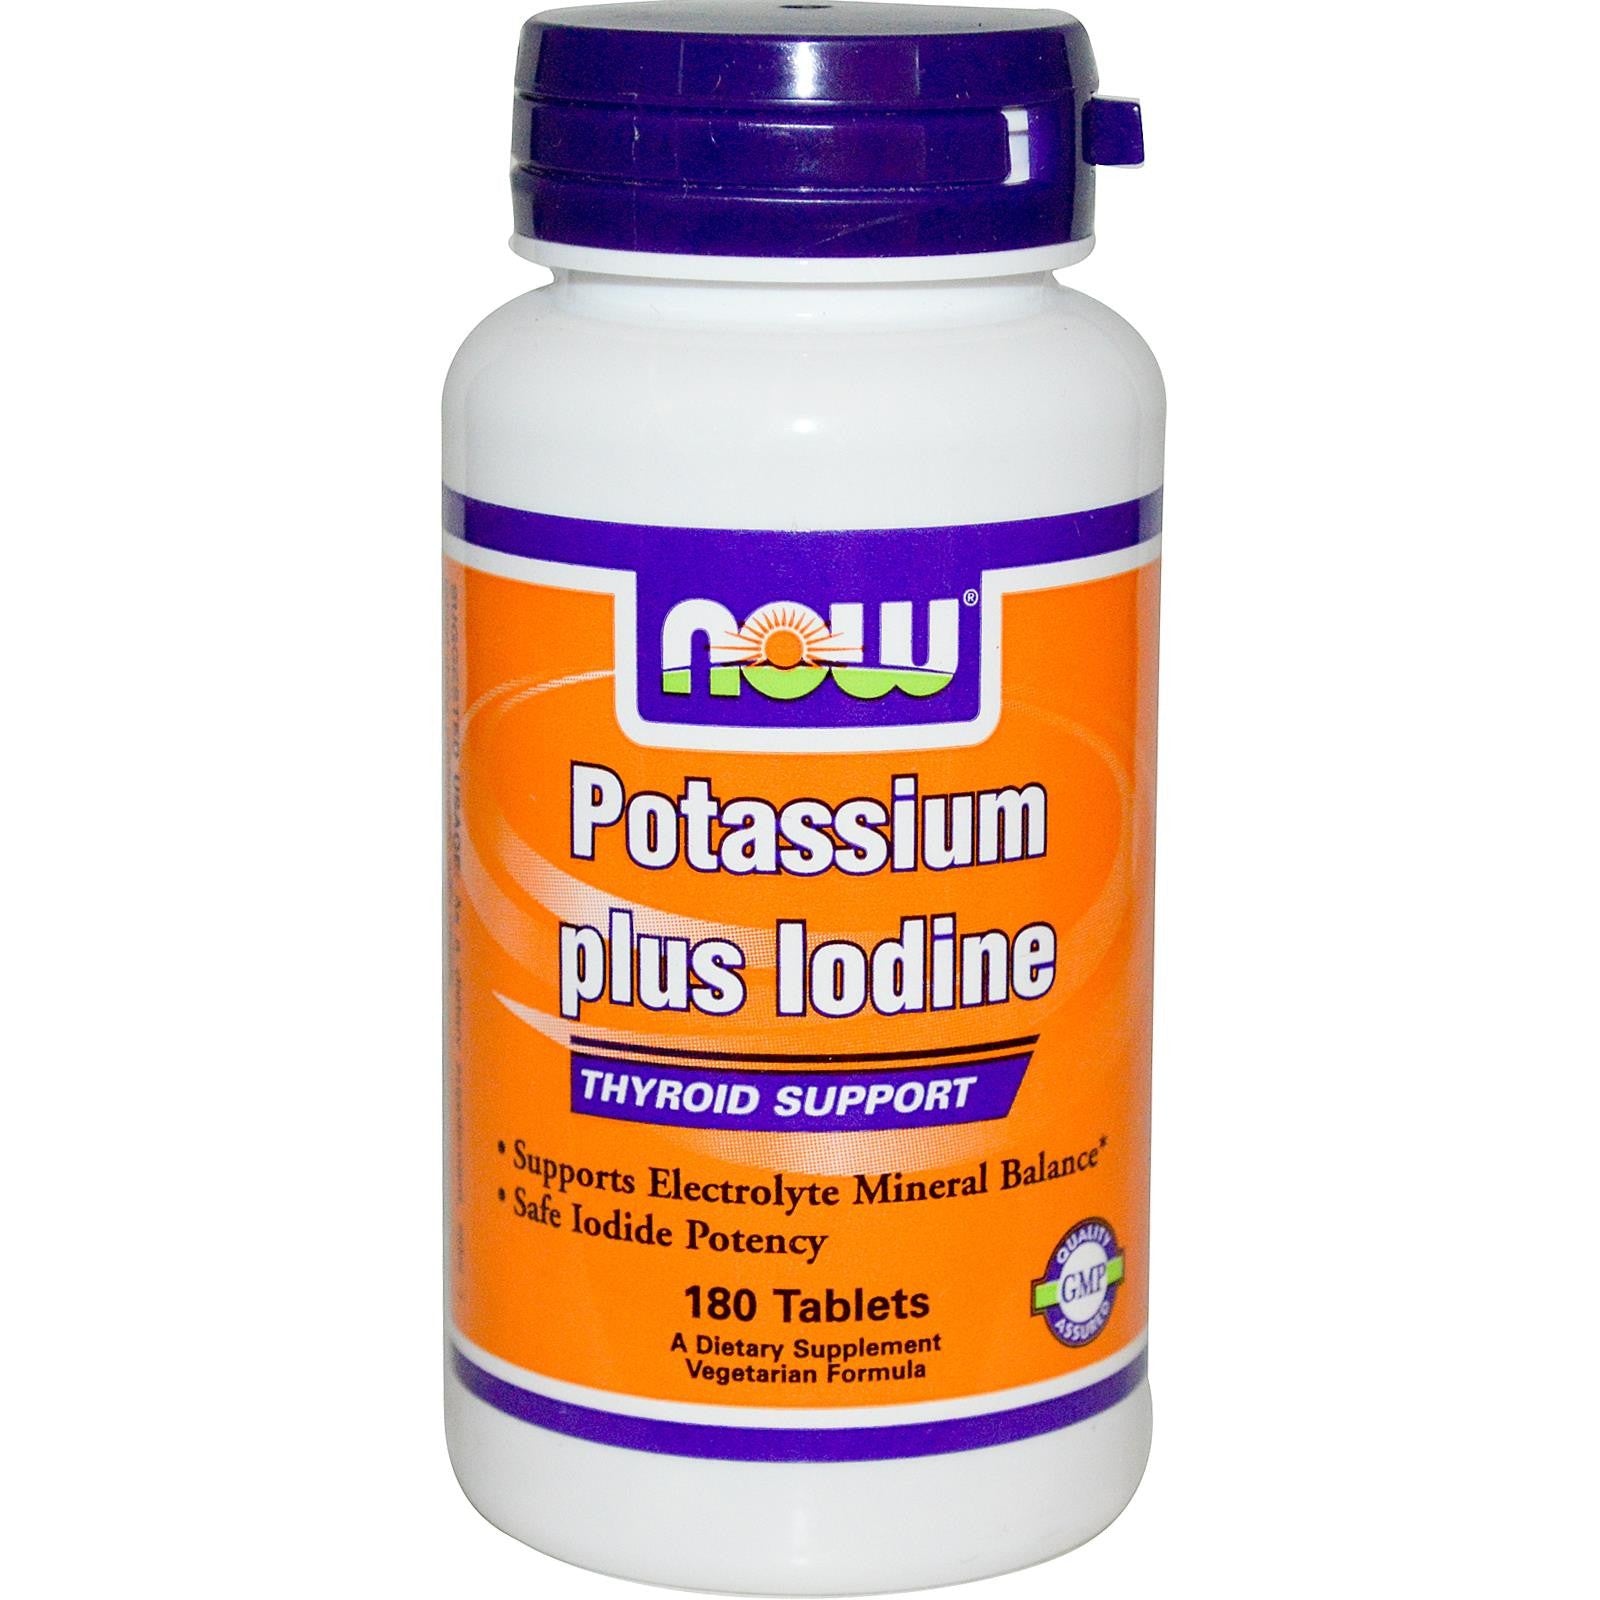 safe iodine supplement